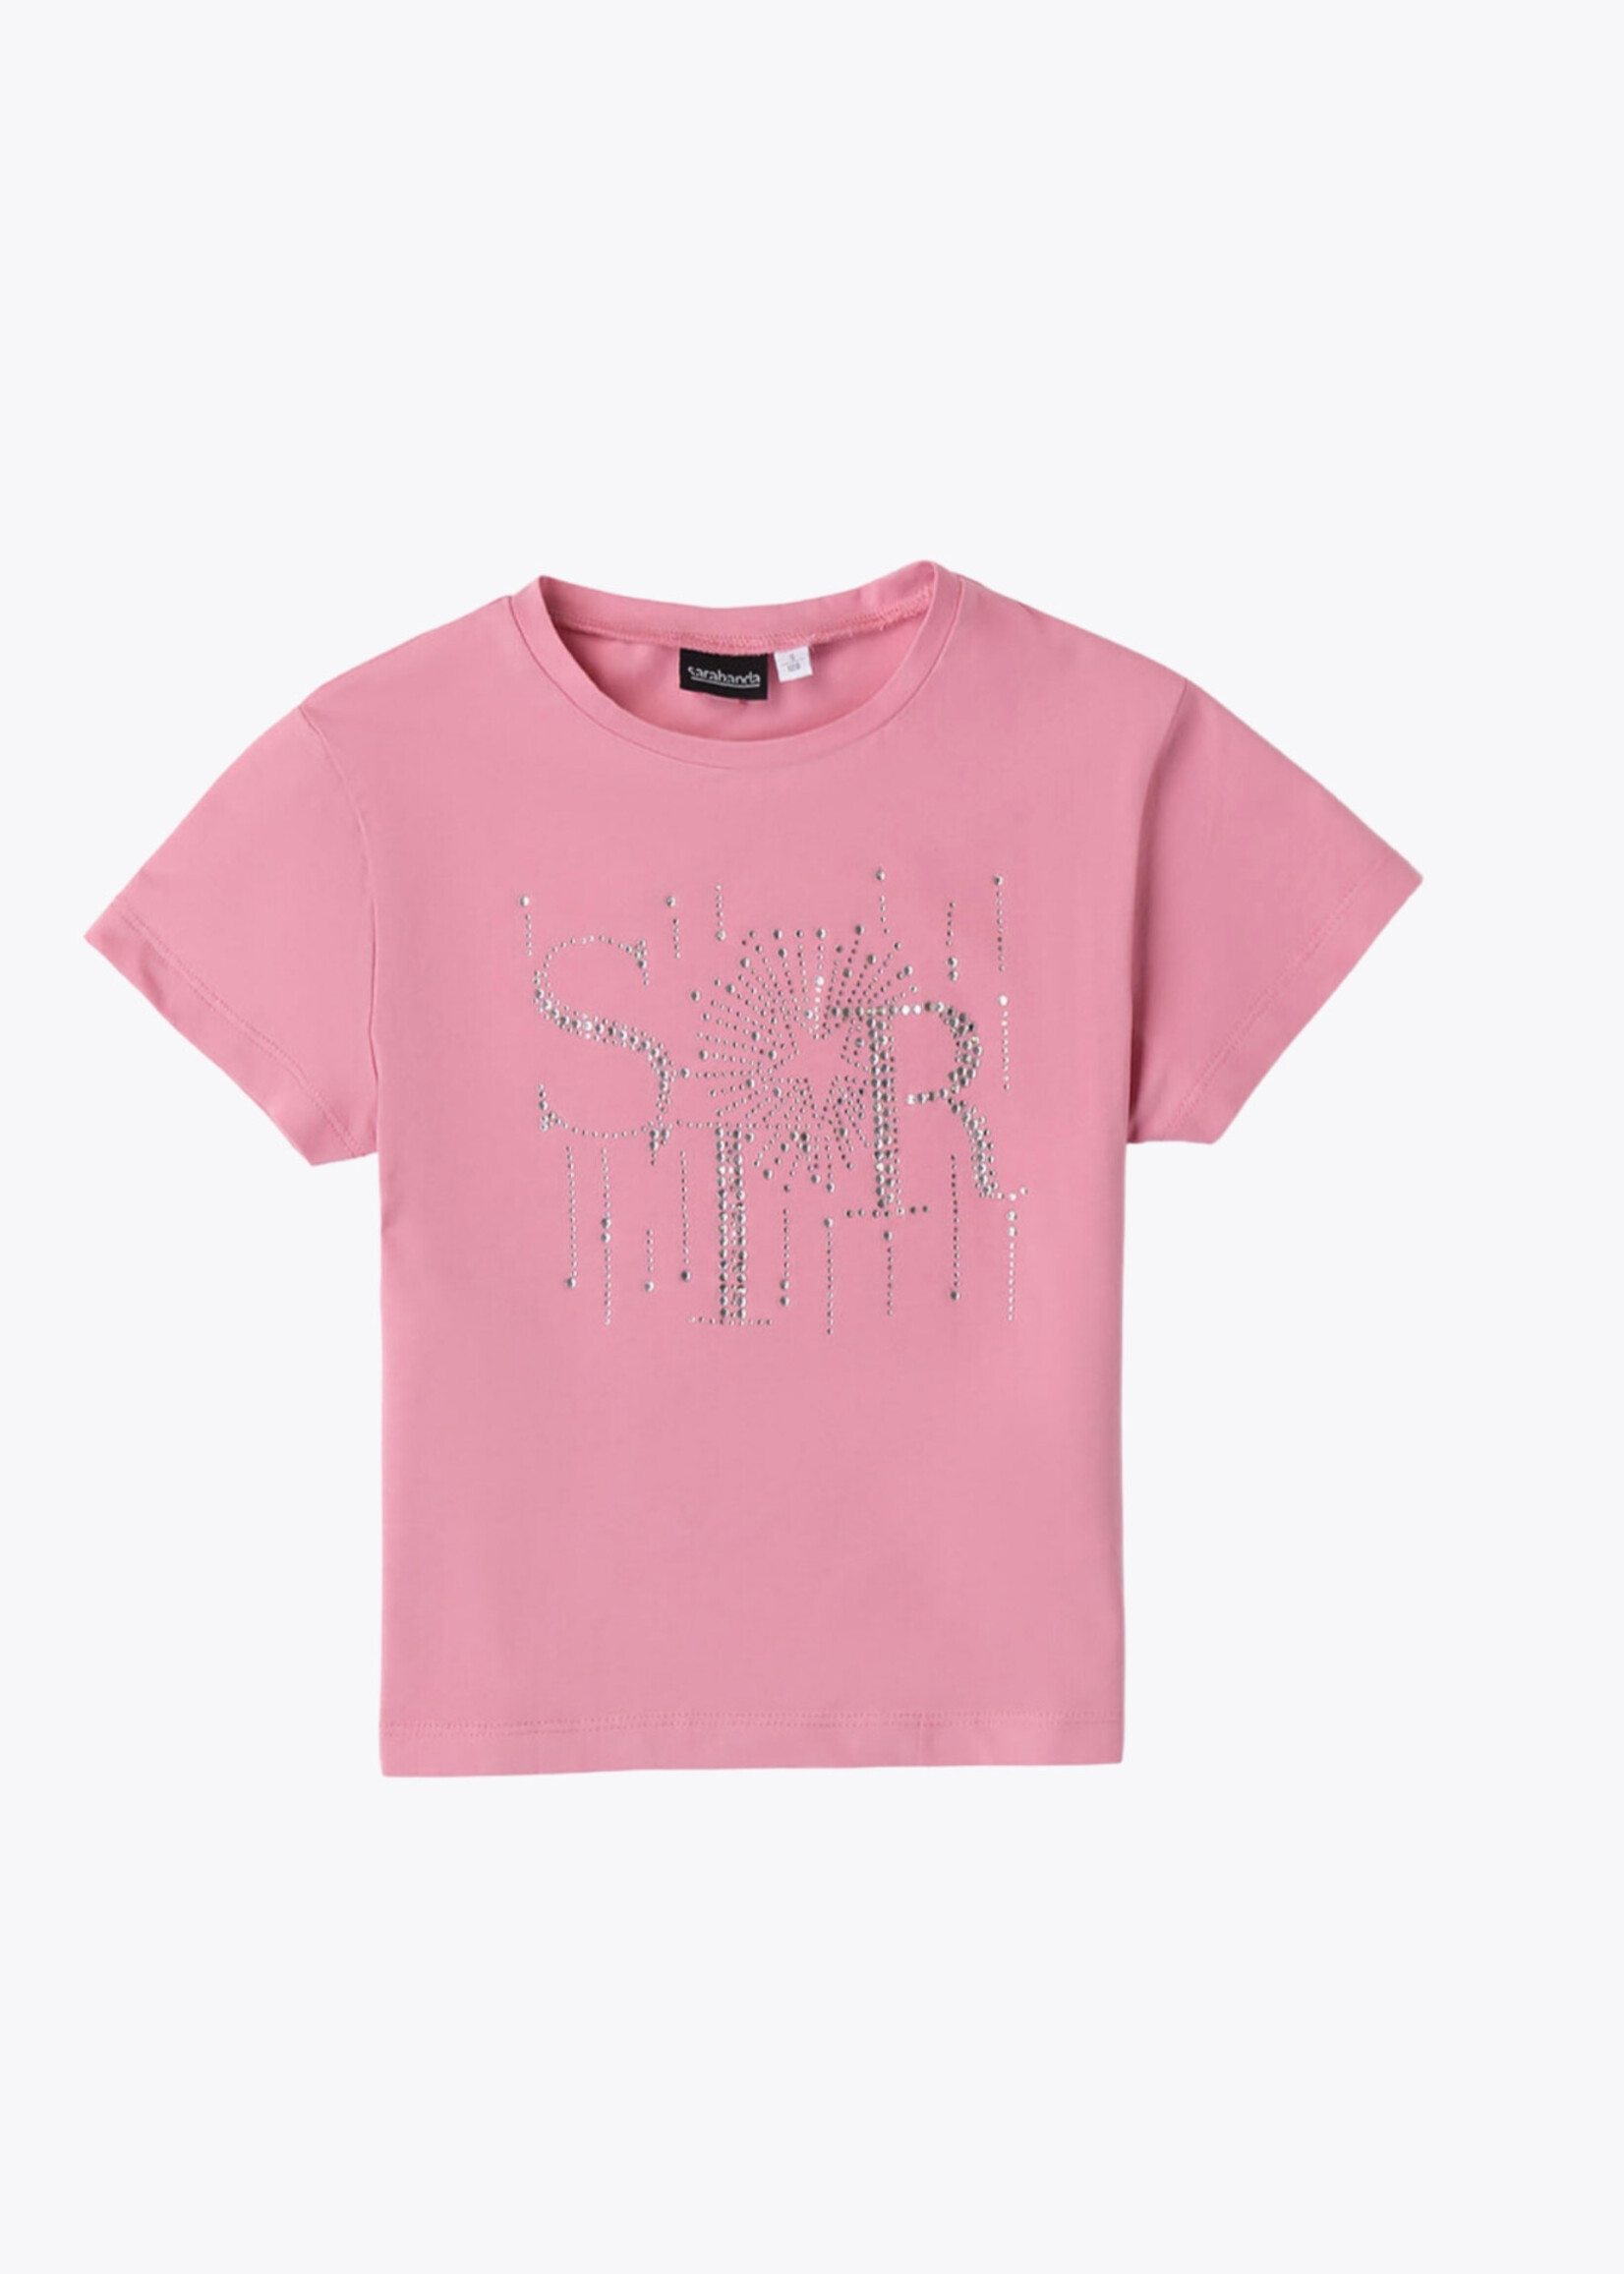 Sarabanda T-shirt in Pink with logo in strass.